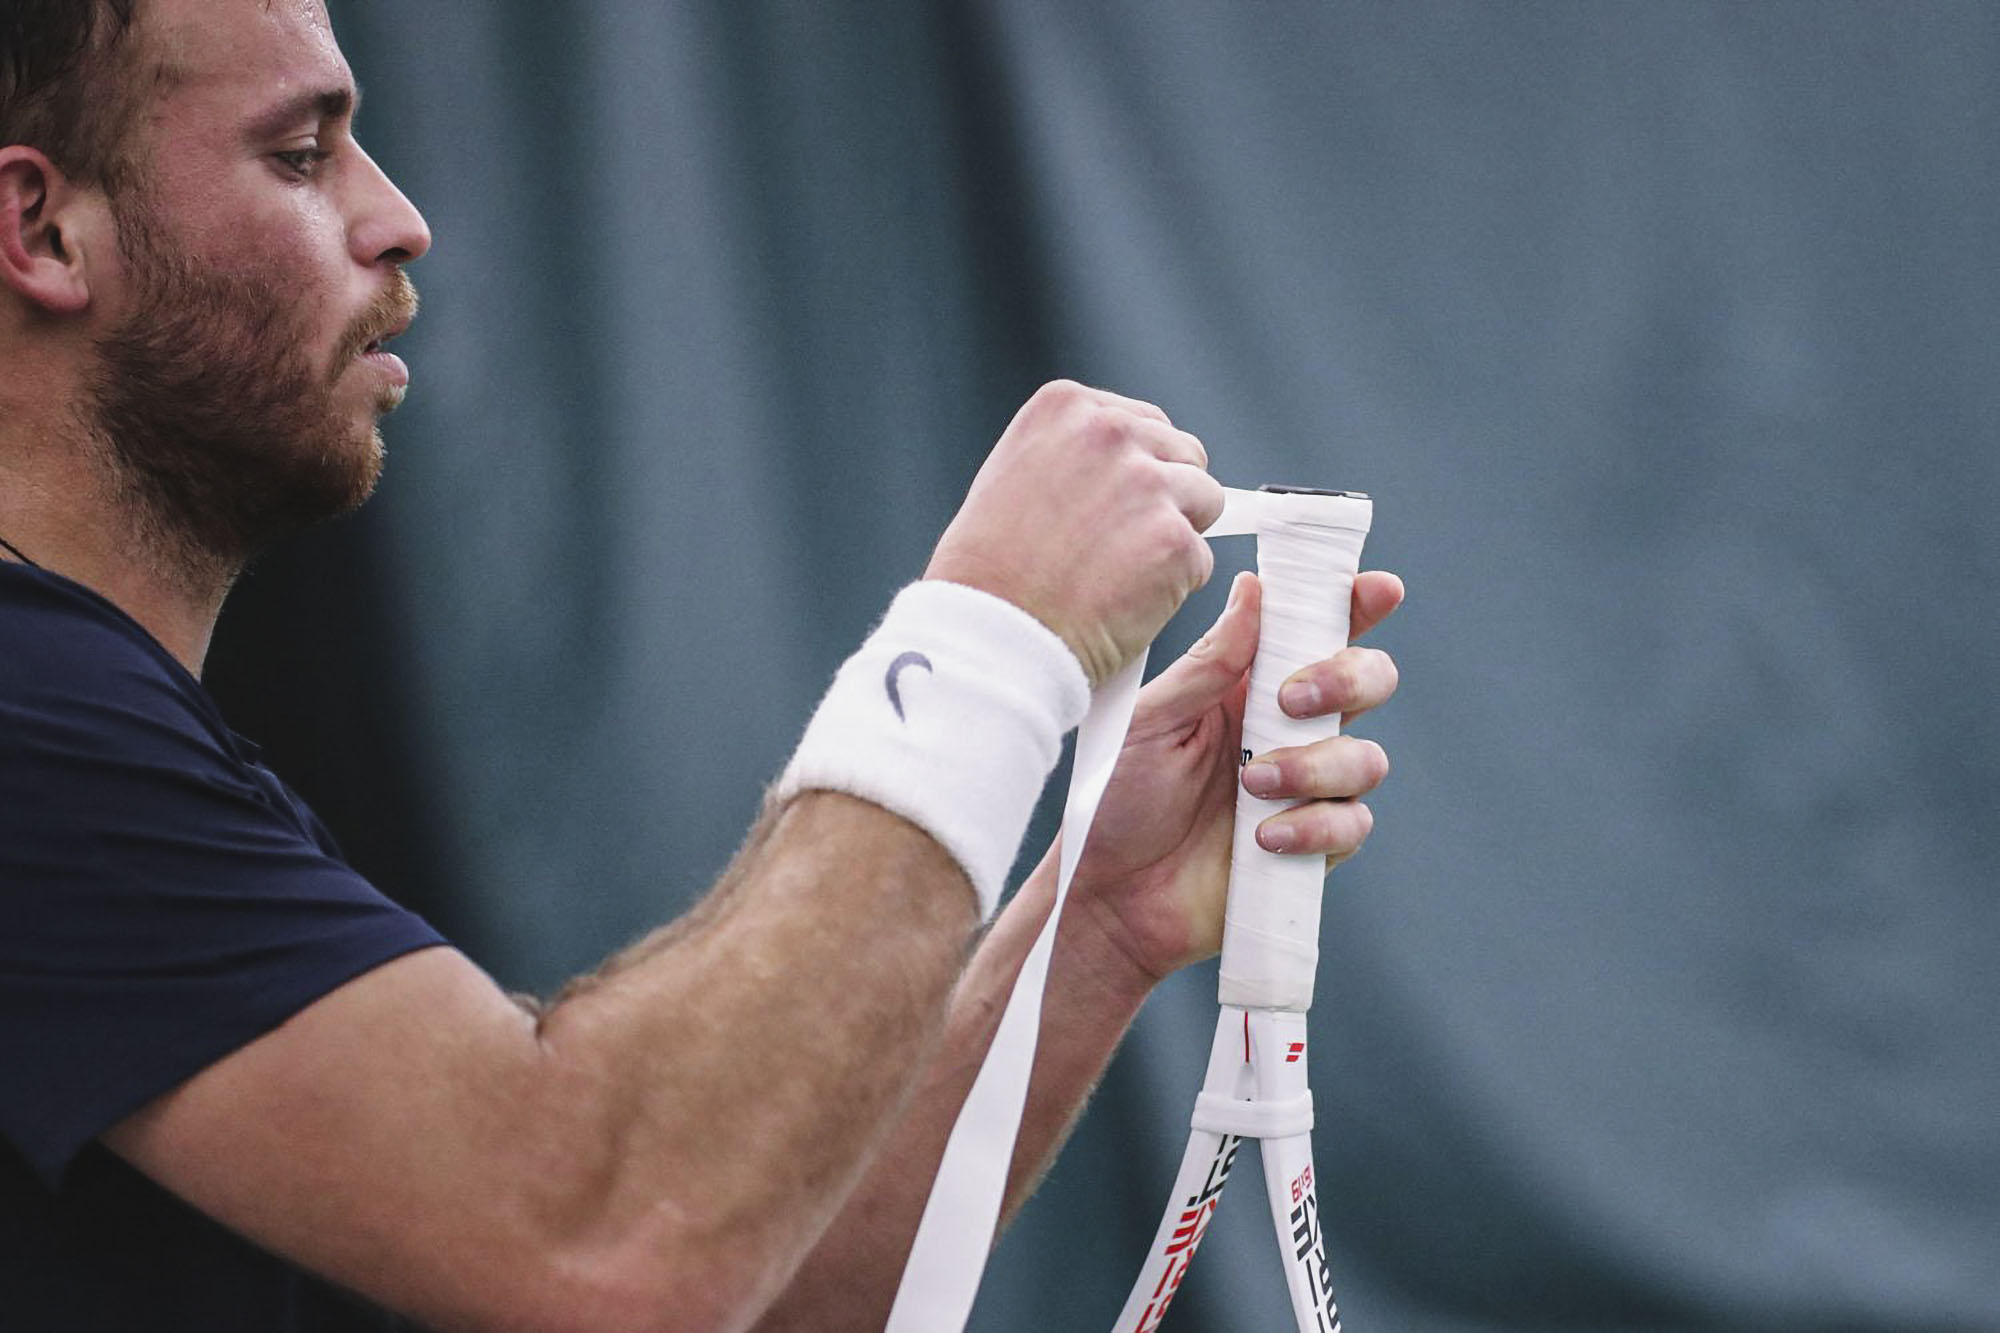 Botzer retapping his tennis racquet 